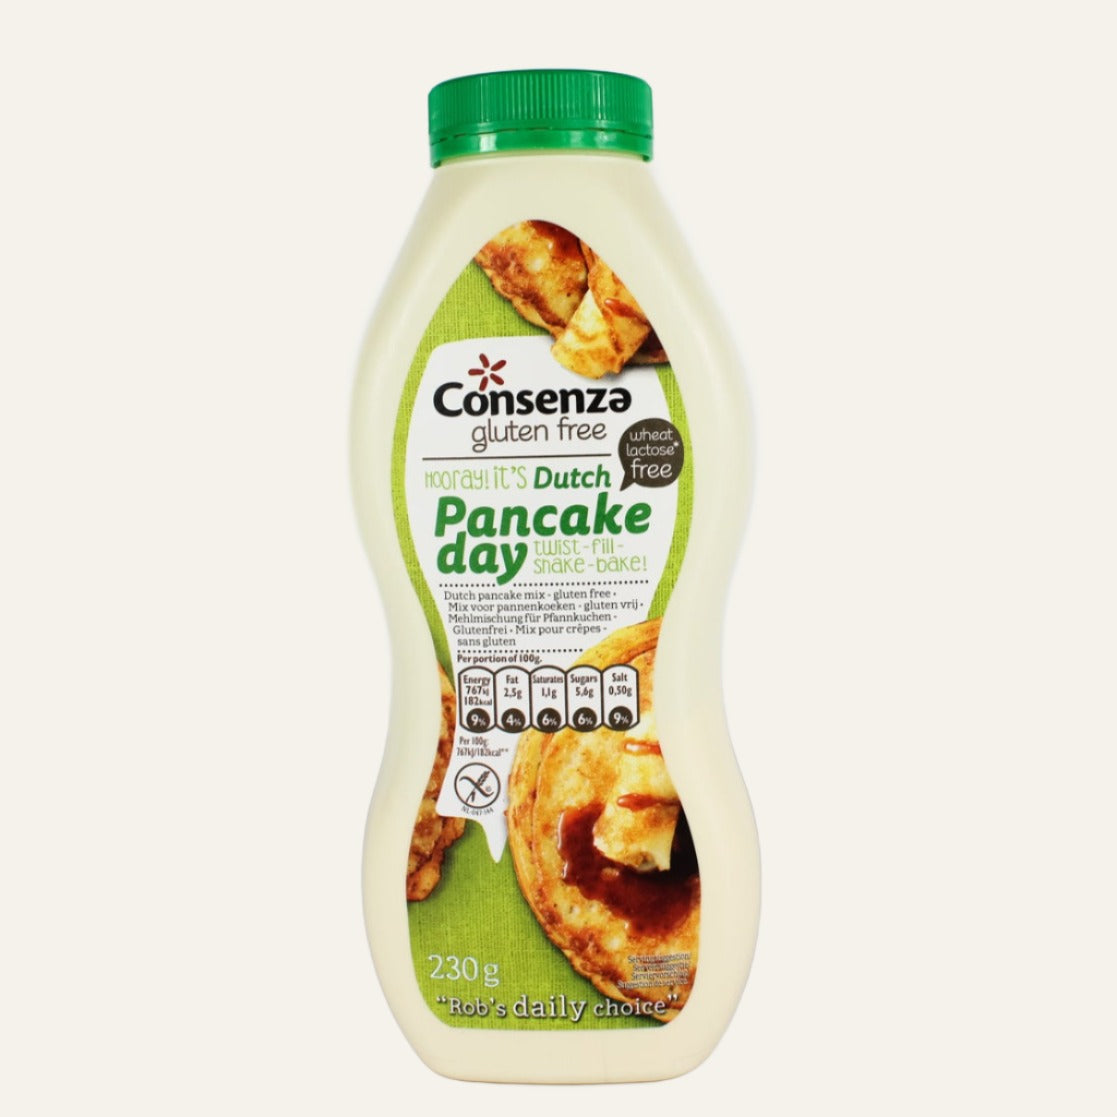 Consenza Gluten Free - Pancakeshaker mix in a bottle